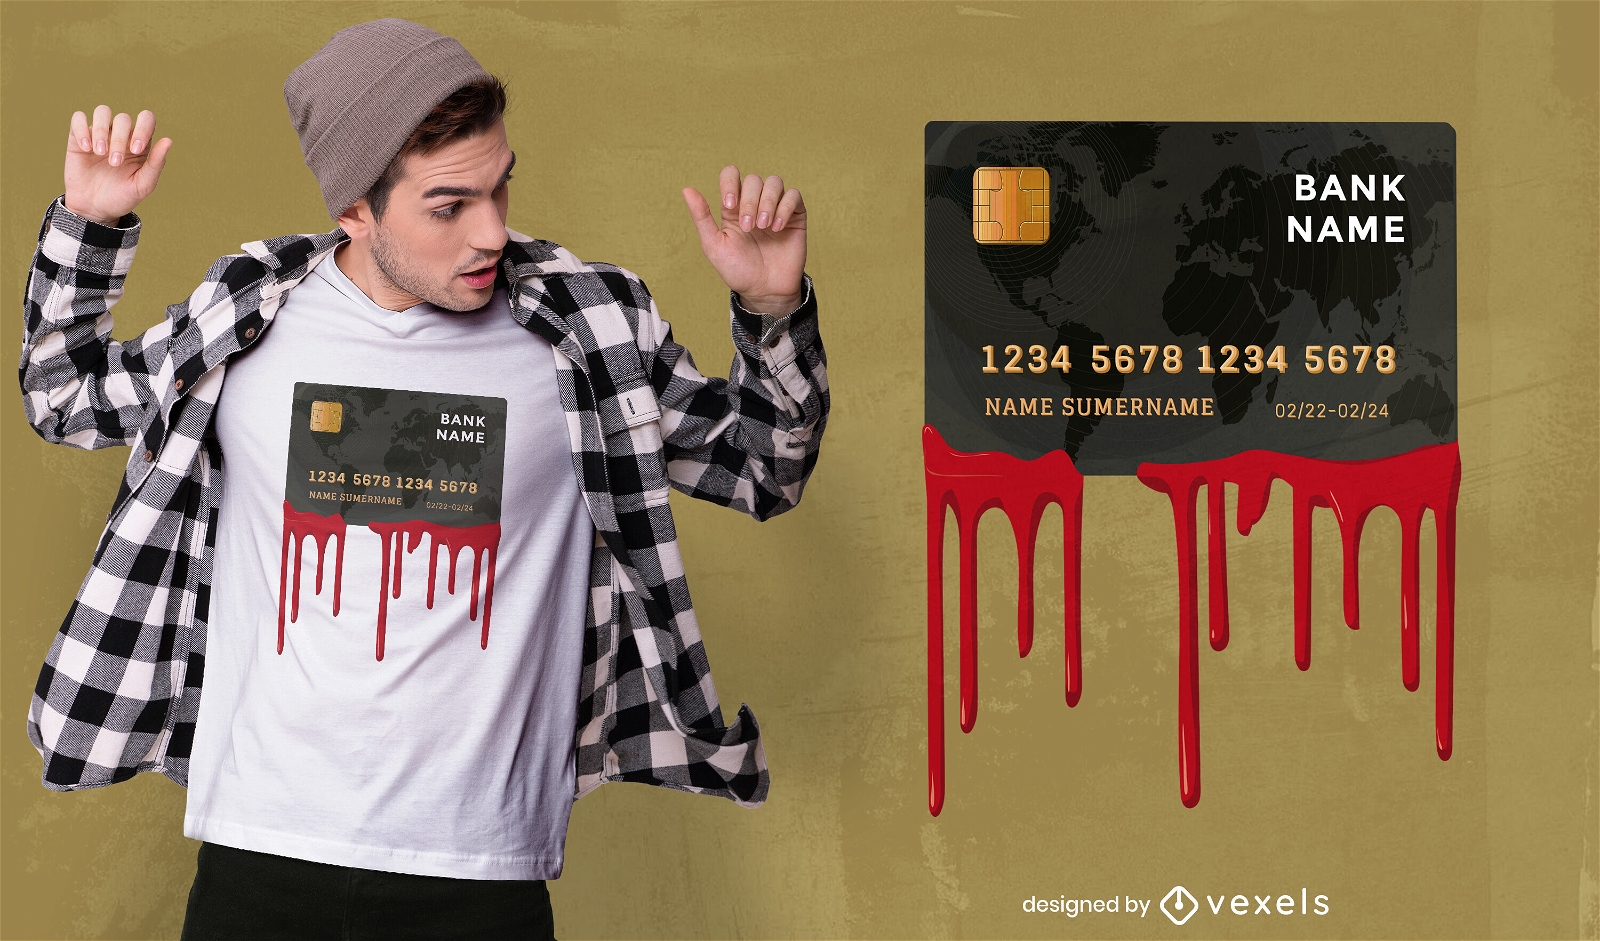 Blutiges T-Shirt-Design f?r Kreditkartengeld